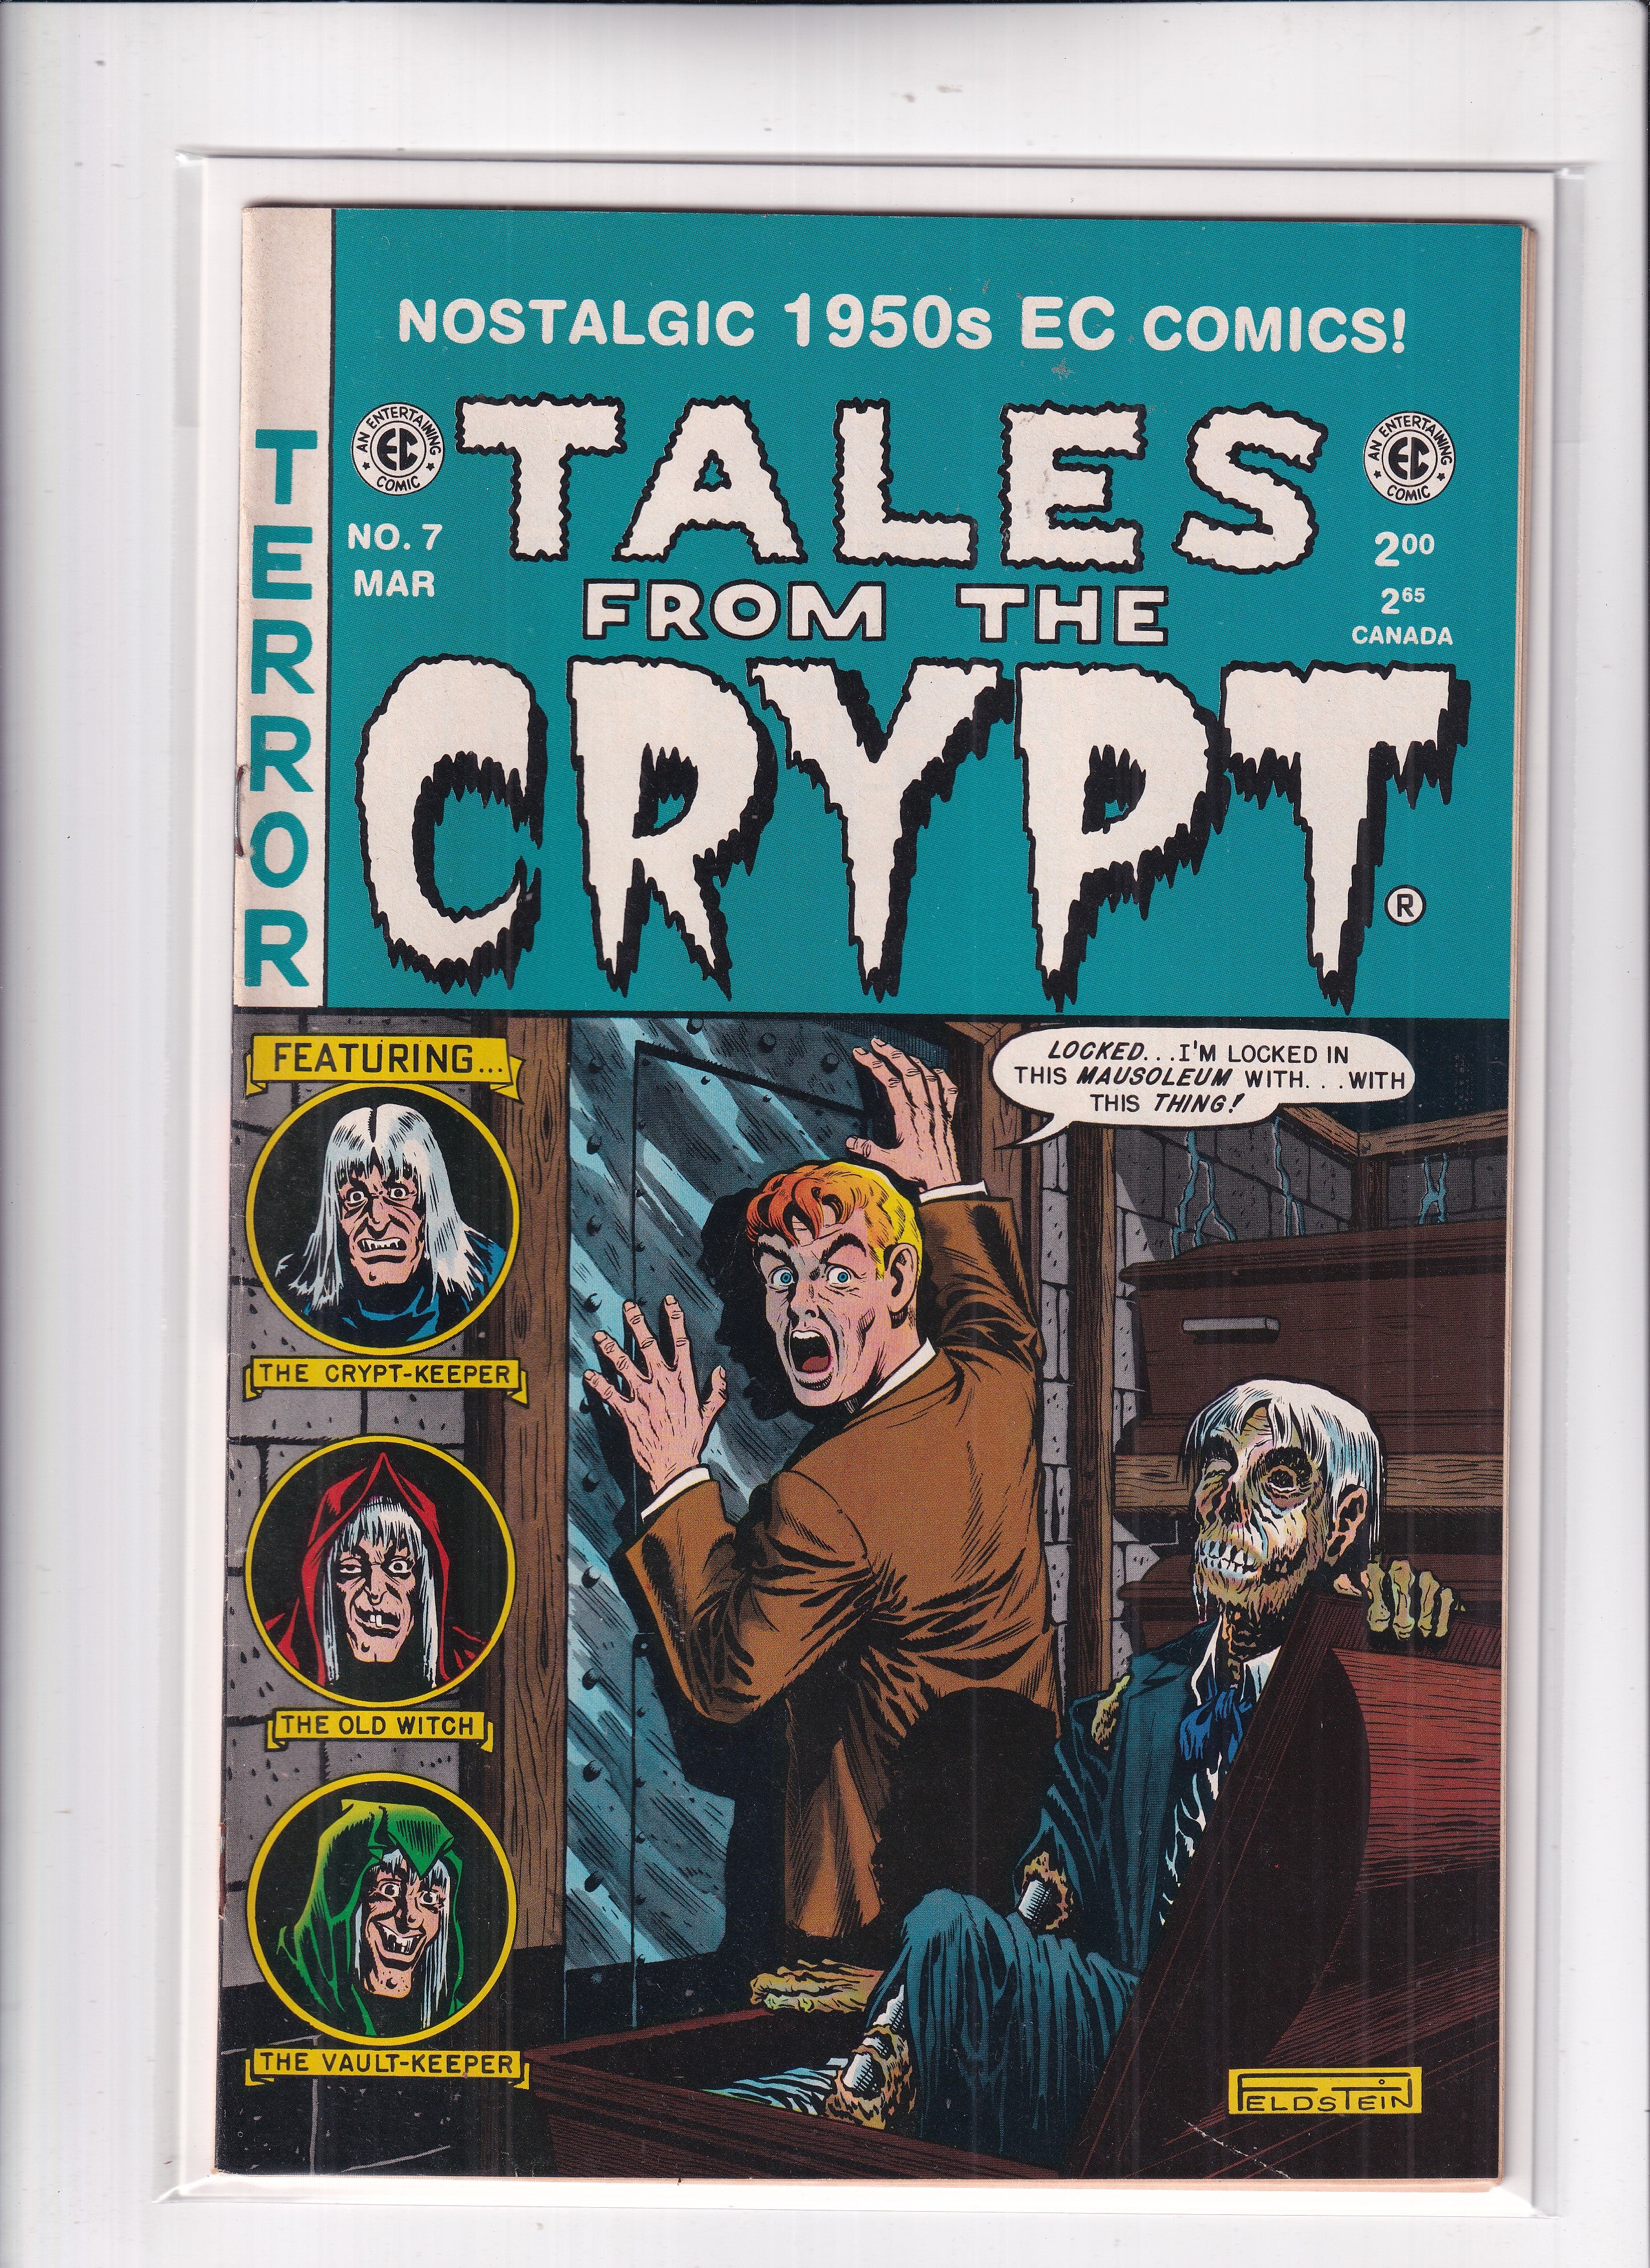 TALES FROM THE CRYPT #7 EC REPRINT - Slab City Comics 